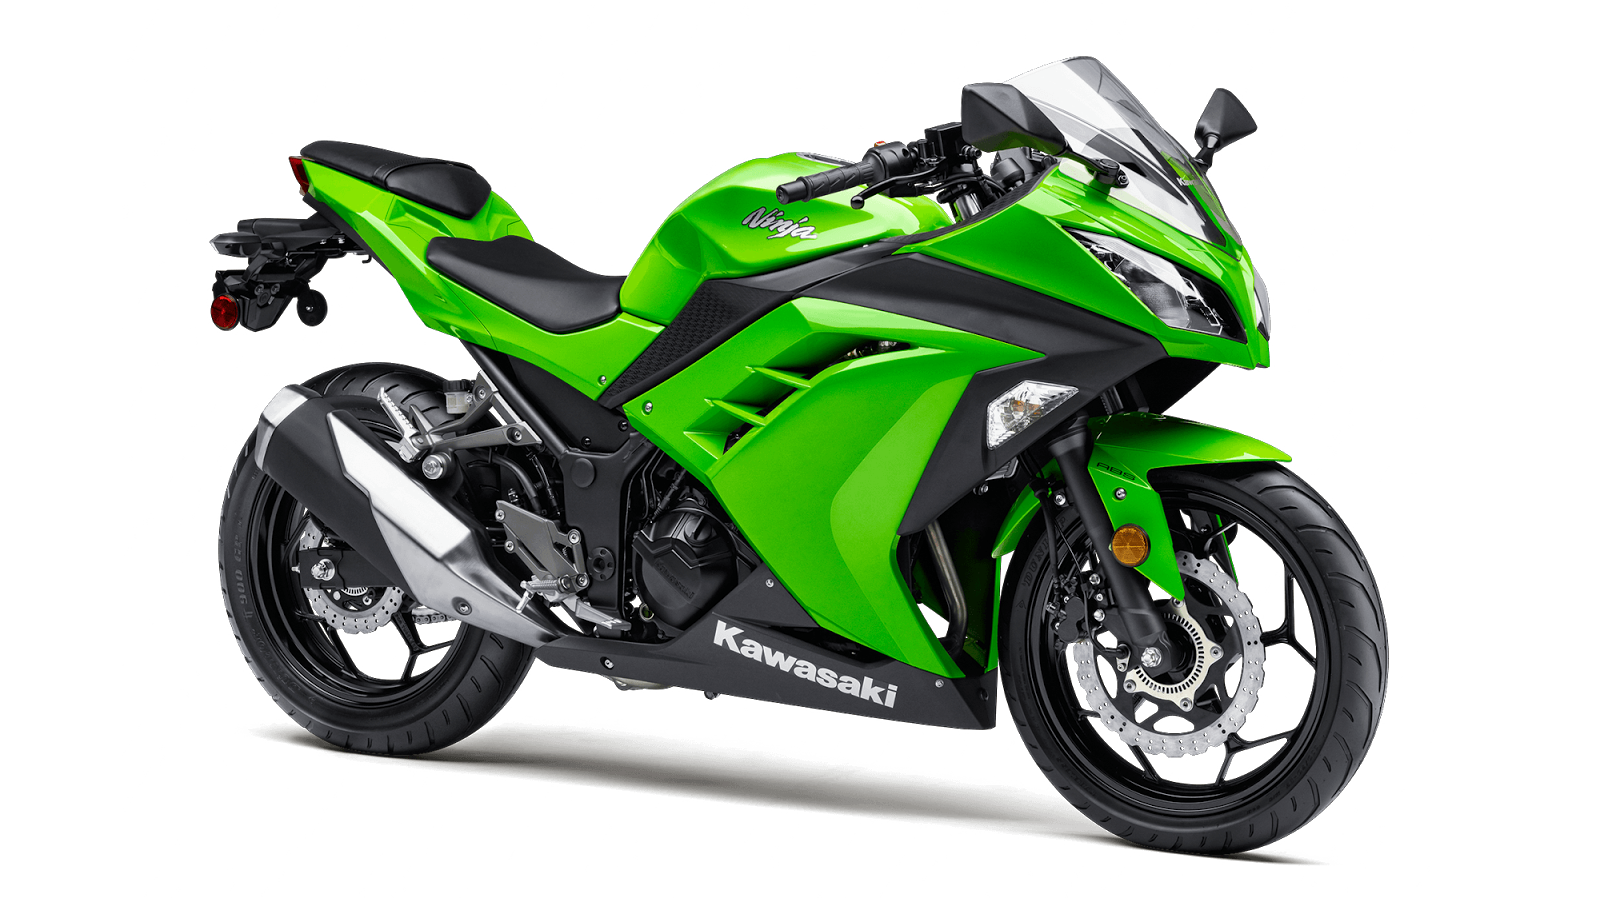 2015 Kawasaki Ninja 300 ABS - Motorcycle Details